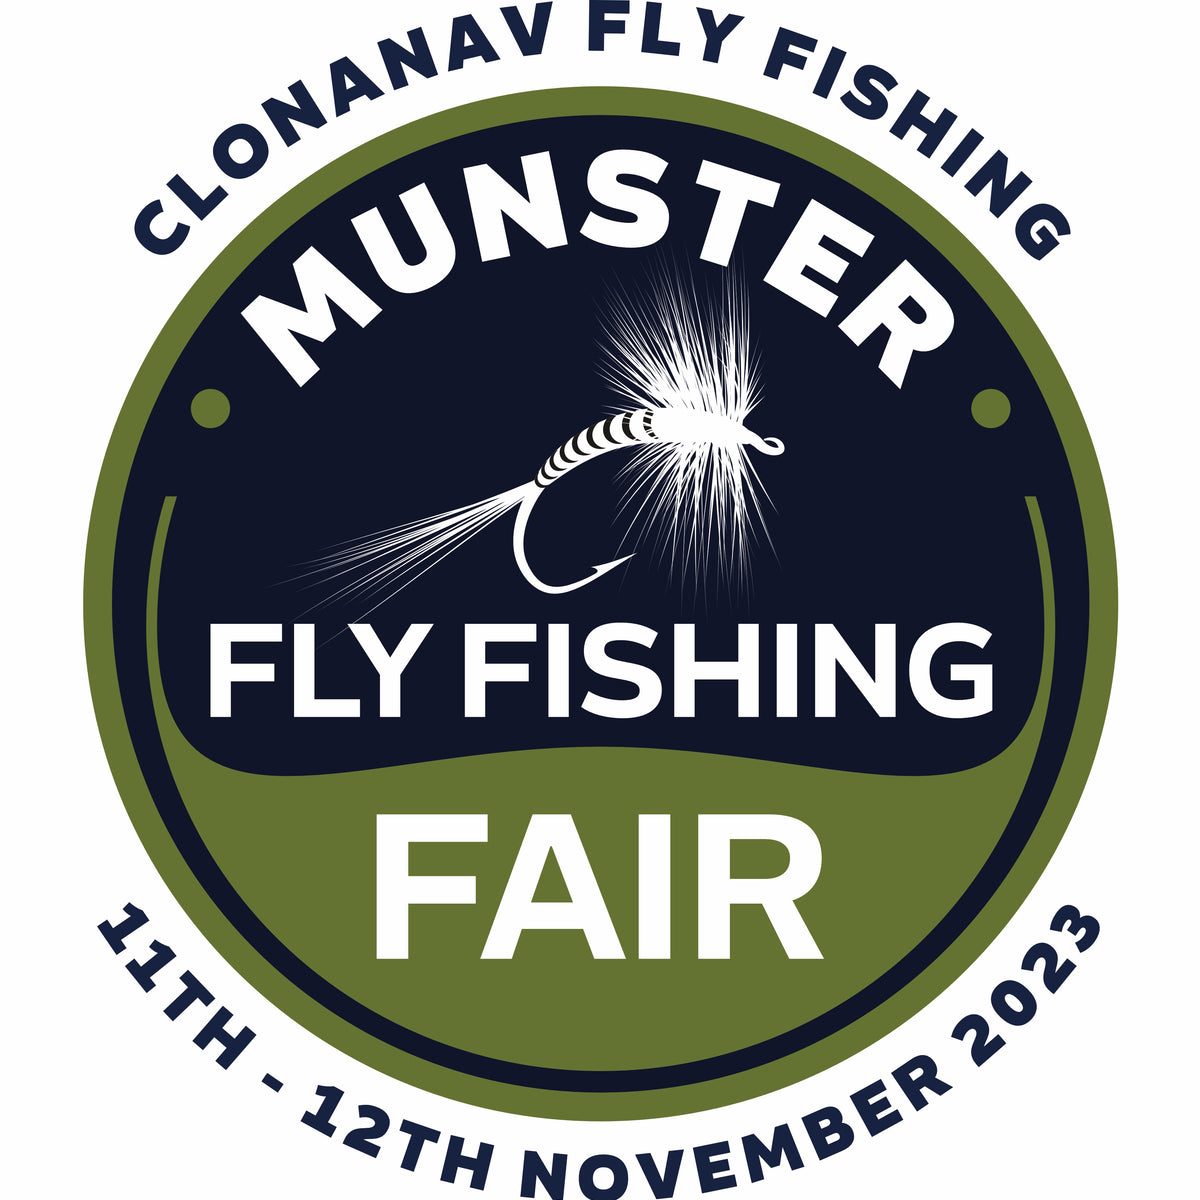 Gift Card – Clonanav Fly Fishing